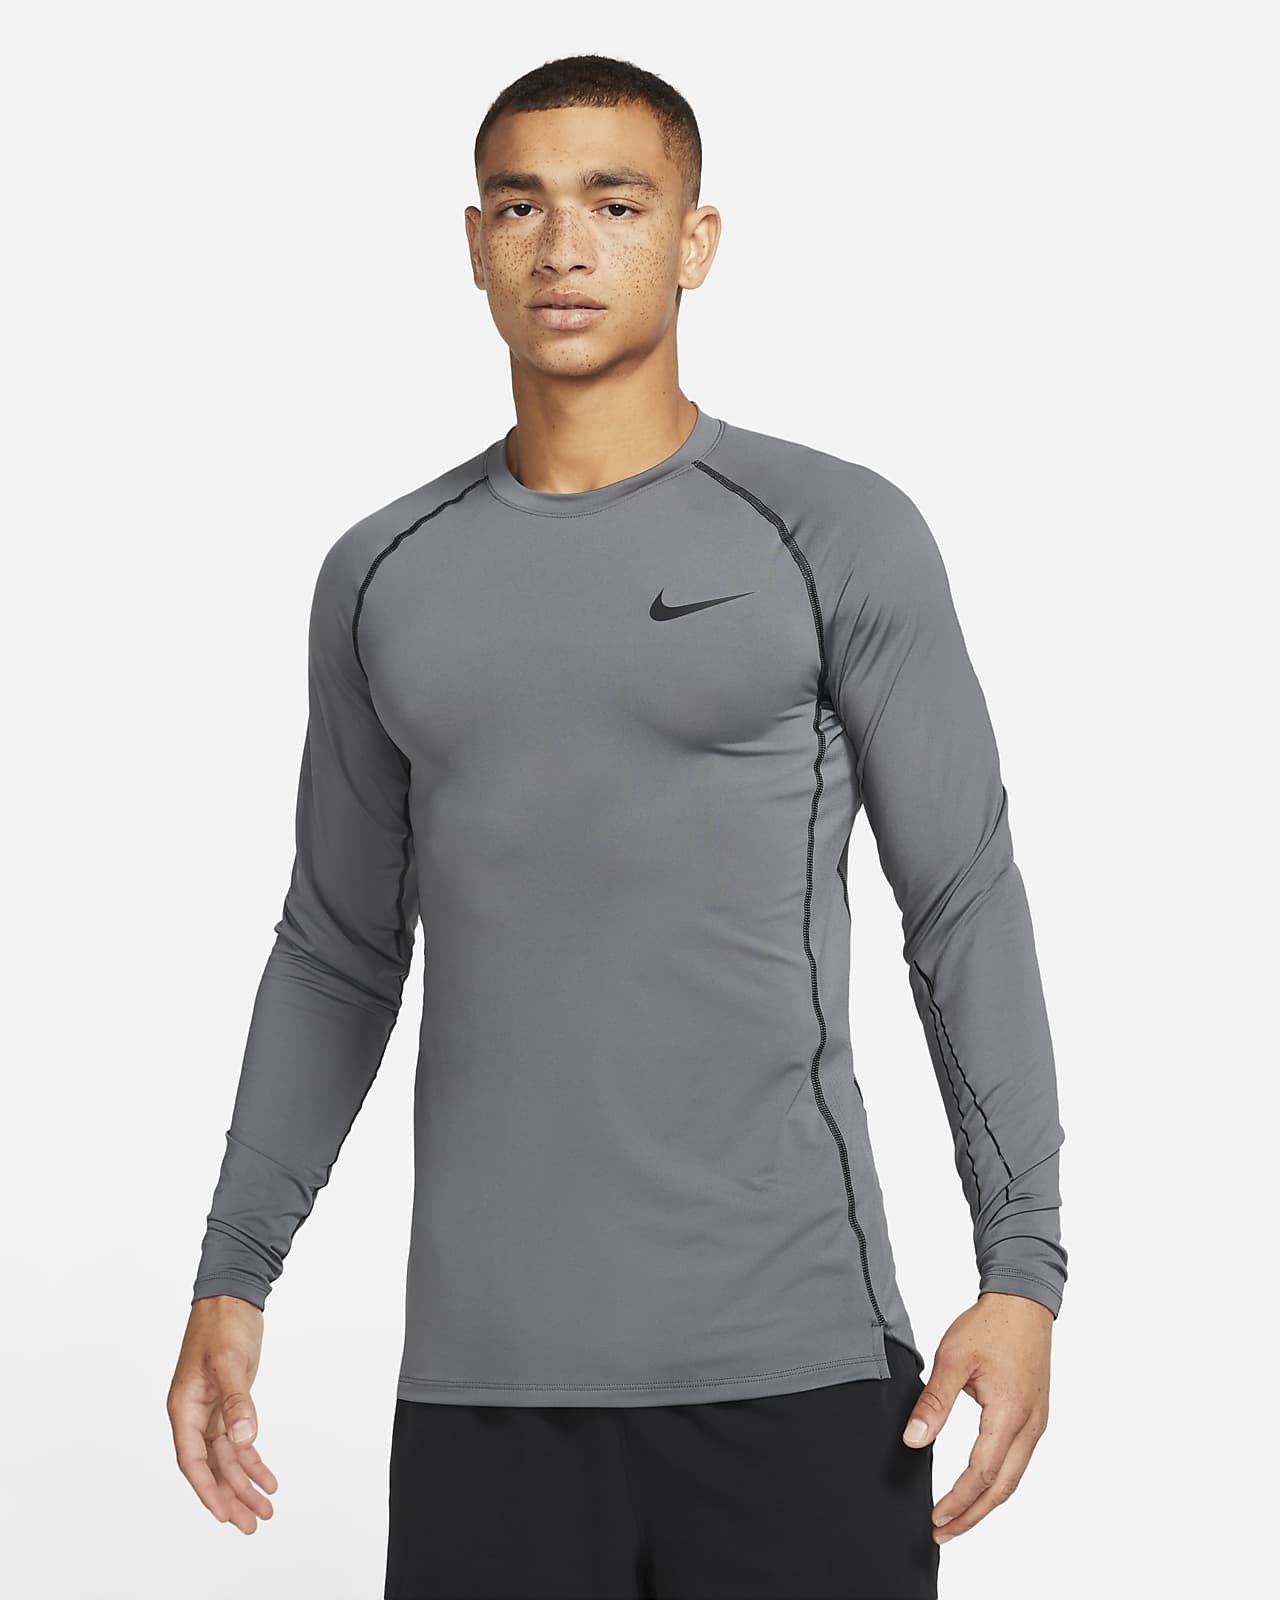 Dentro foso agitación Camiseta de manga larga y ajuste entallado para hombre Nike Pro Dri-FIT.  Nike.com